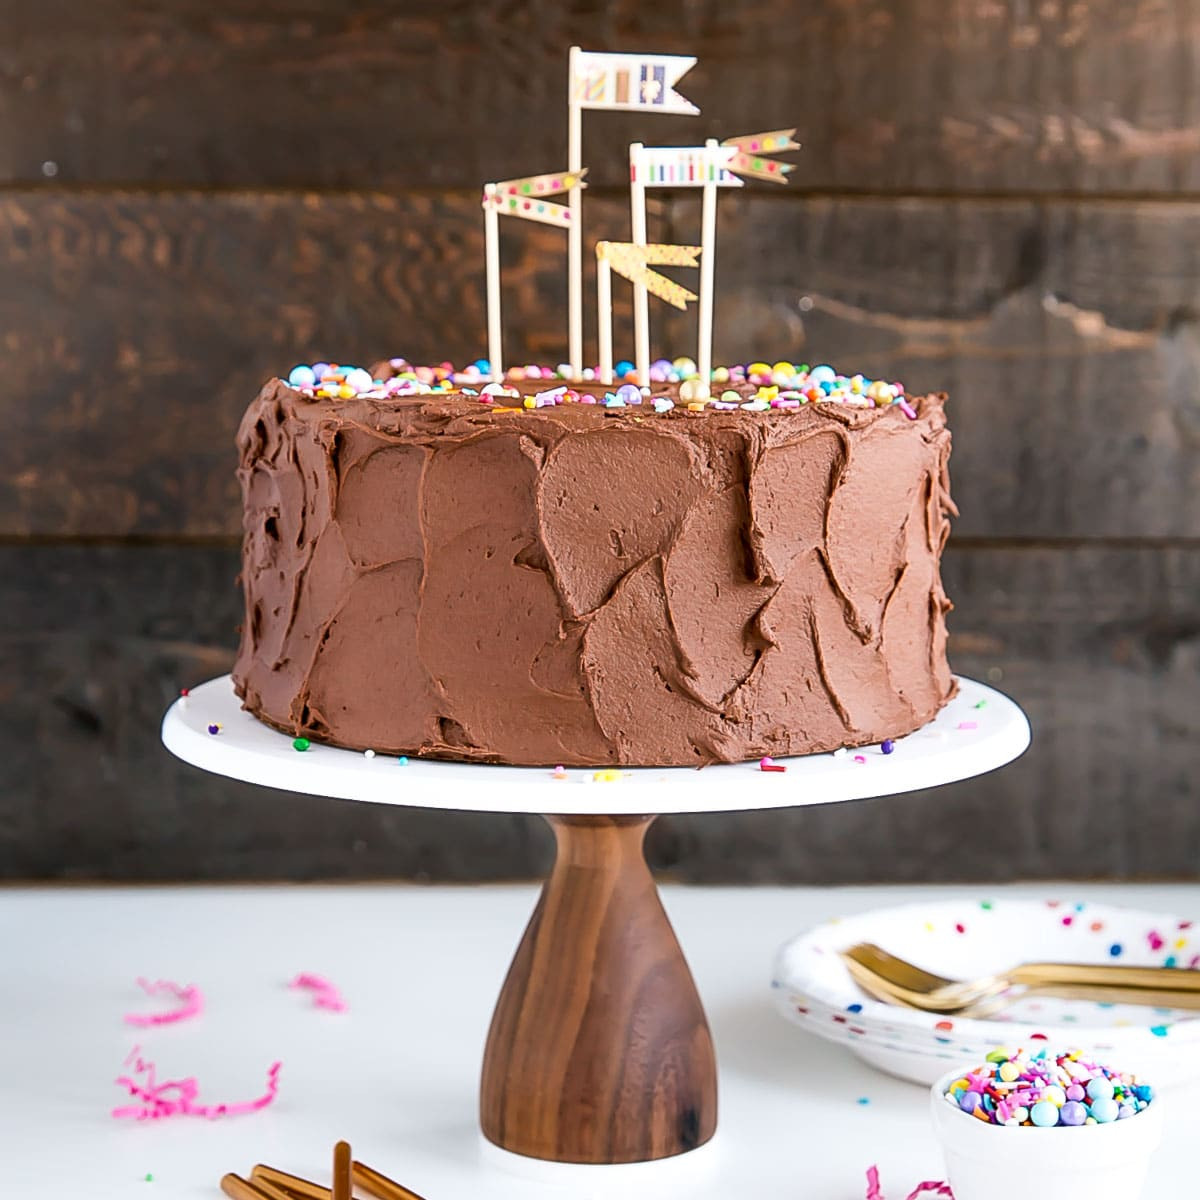 Images Of Birthday Cake
 Classic Birthday Cake